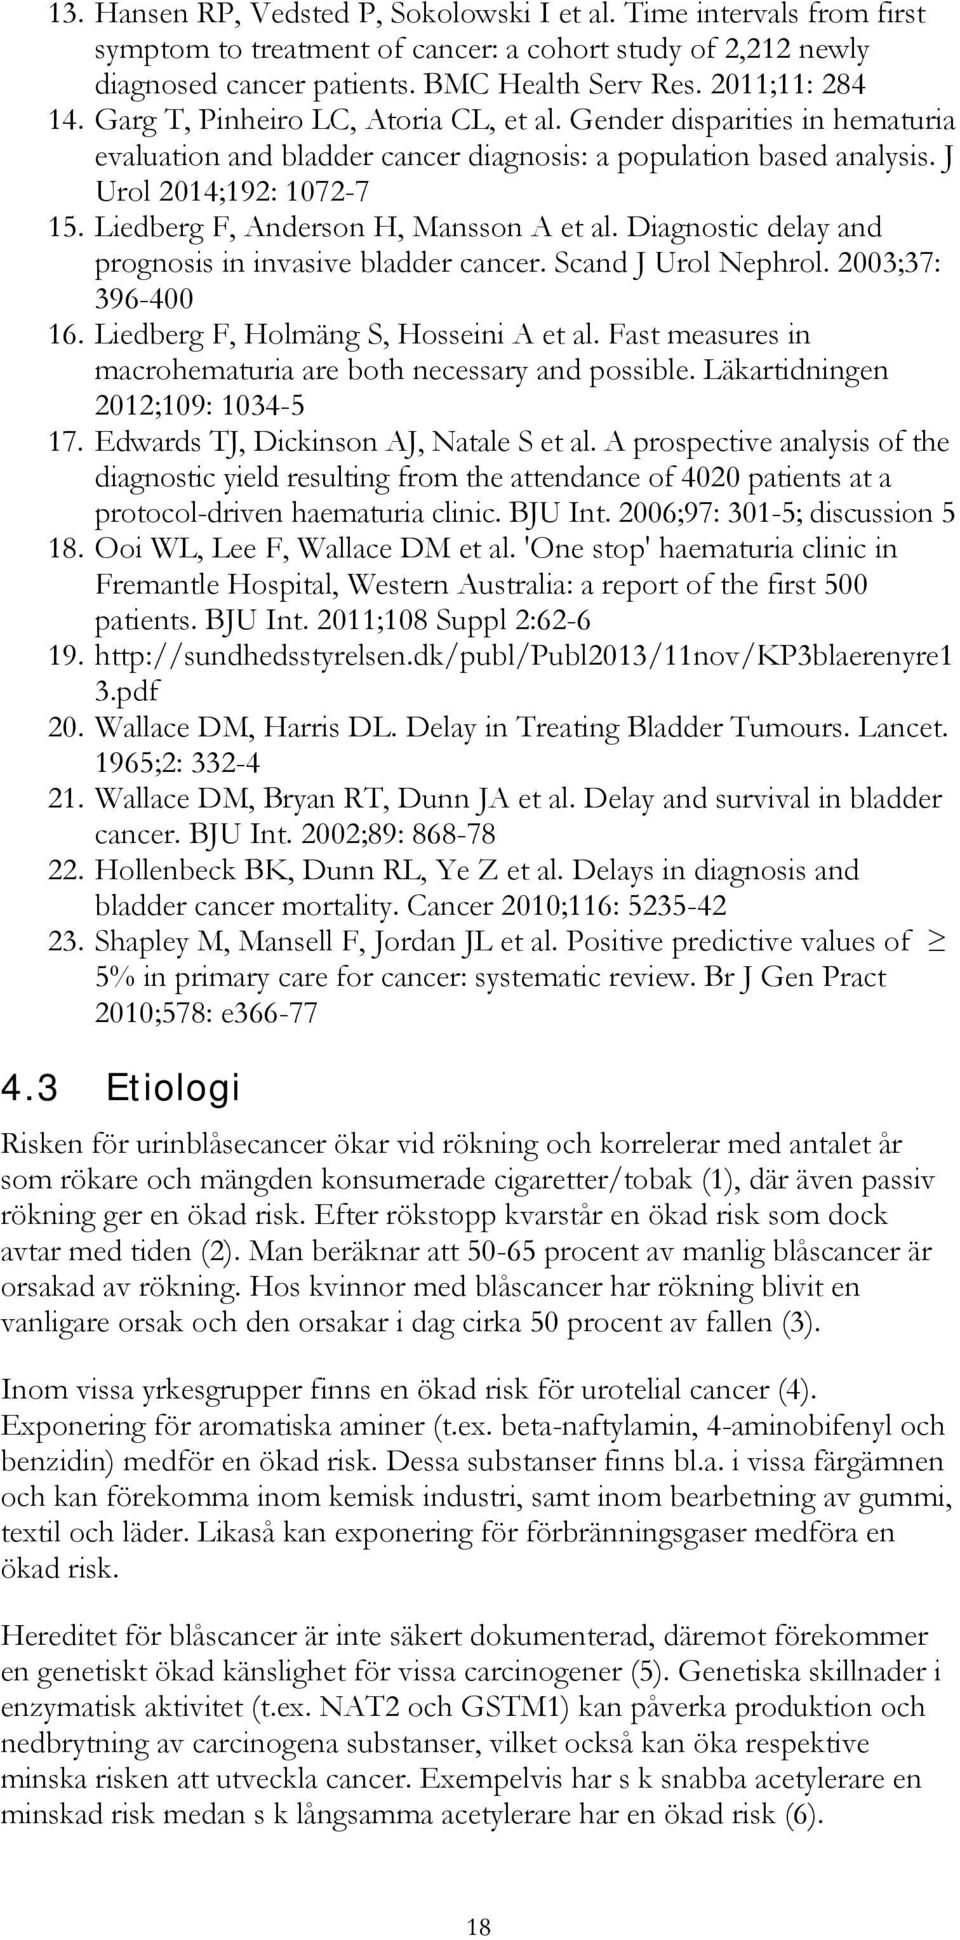 Liedberg F, Anderson H, Mansson A et al. Diagnostic delay and prognosis in invasive bladder cancer. Scand J Urol Nephrol. 2003;37: 396-400 16. Liedberg F, Holmäng S, Hosseini A et al.